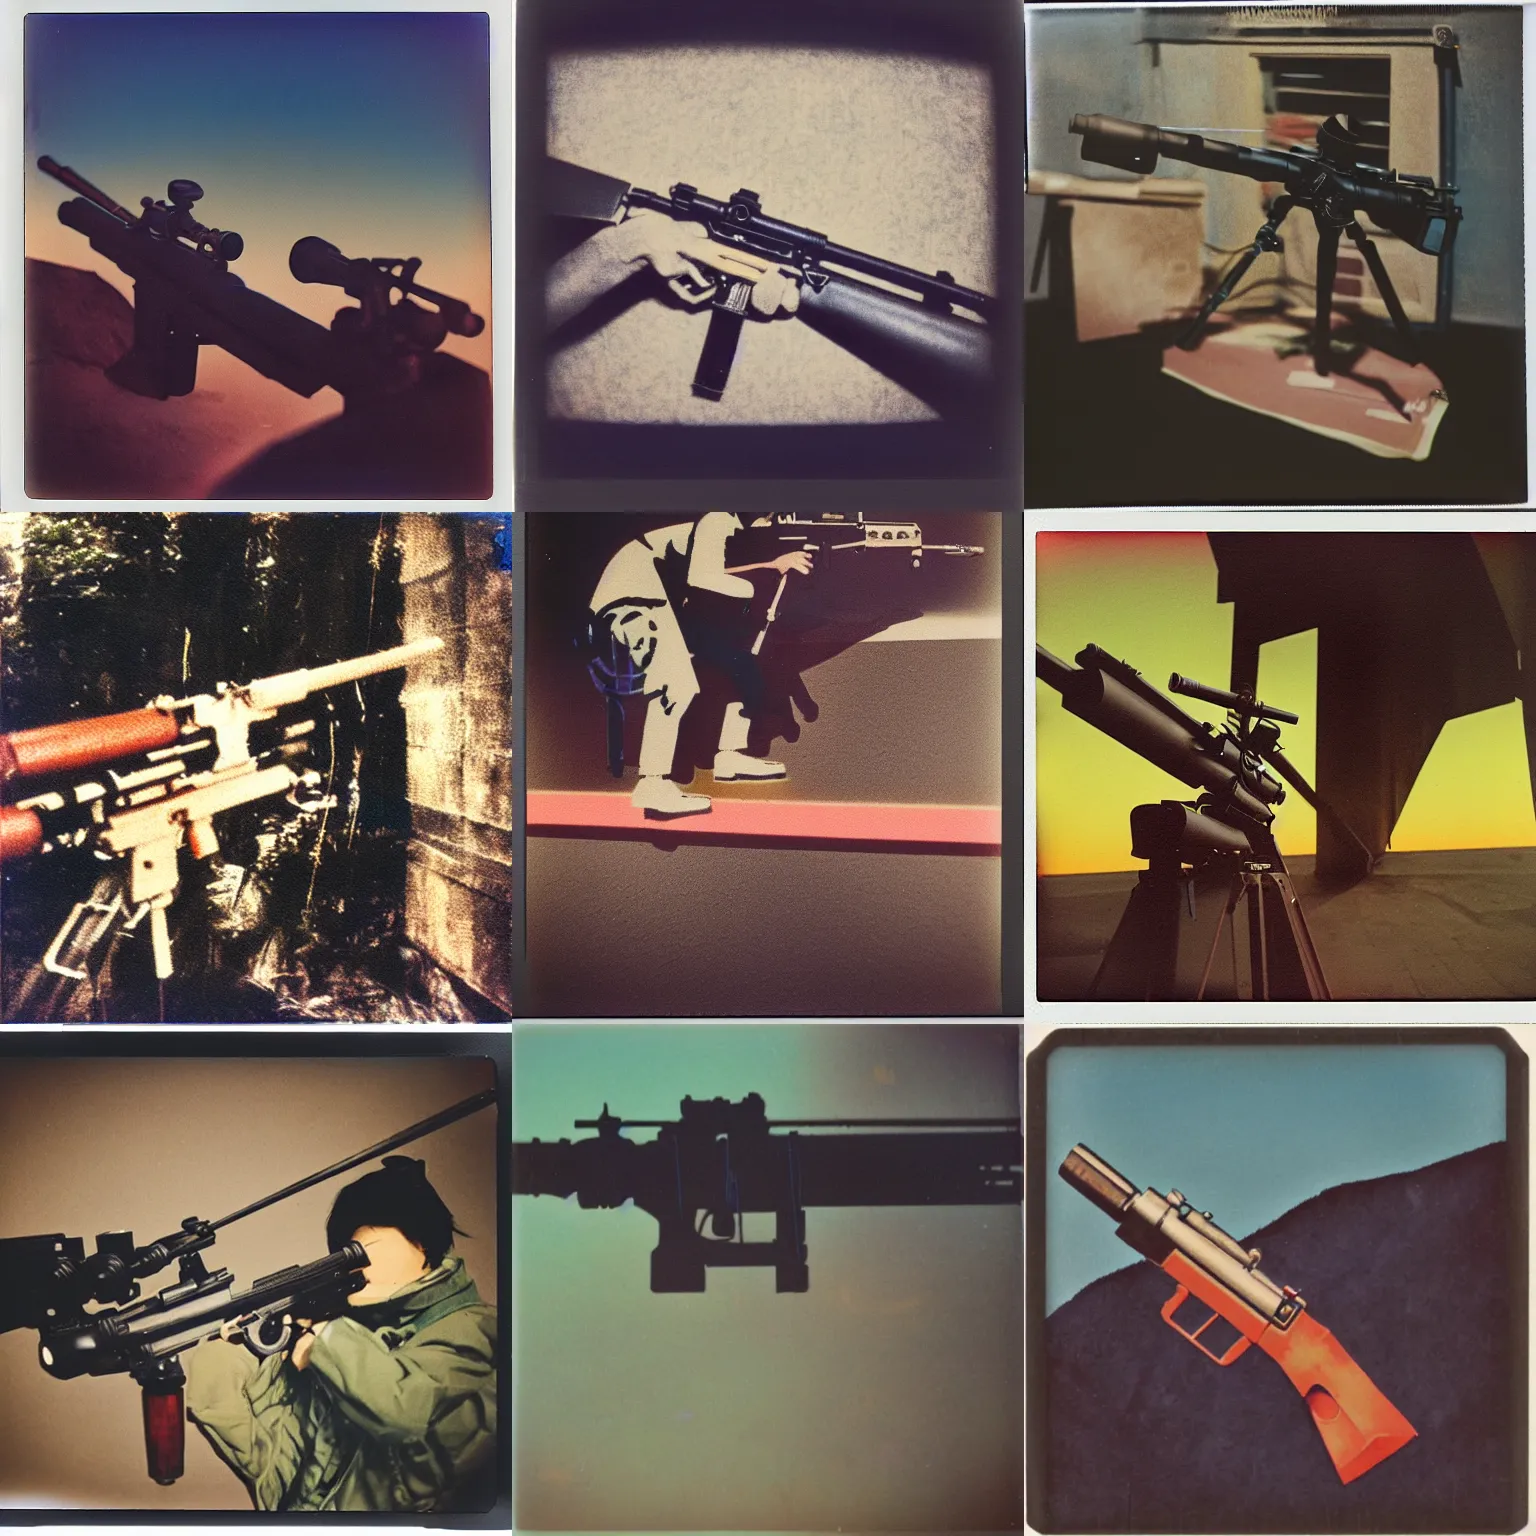 Prompt: Sniper rifle by Tadanori Yokoo, polaroid photo